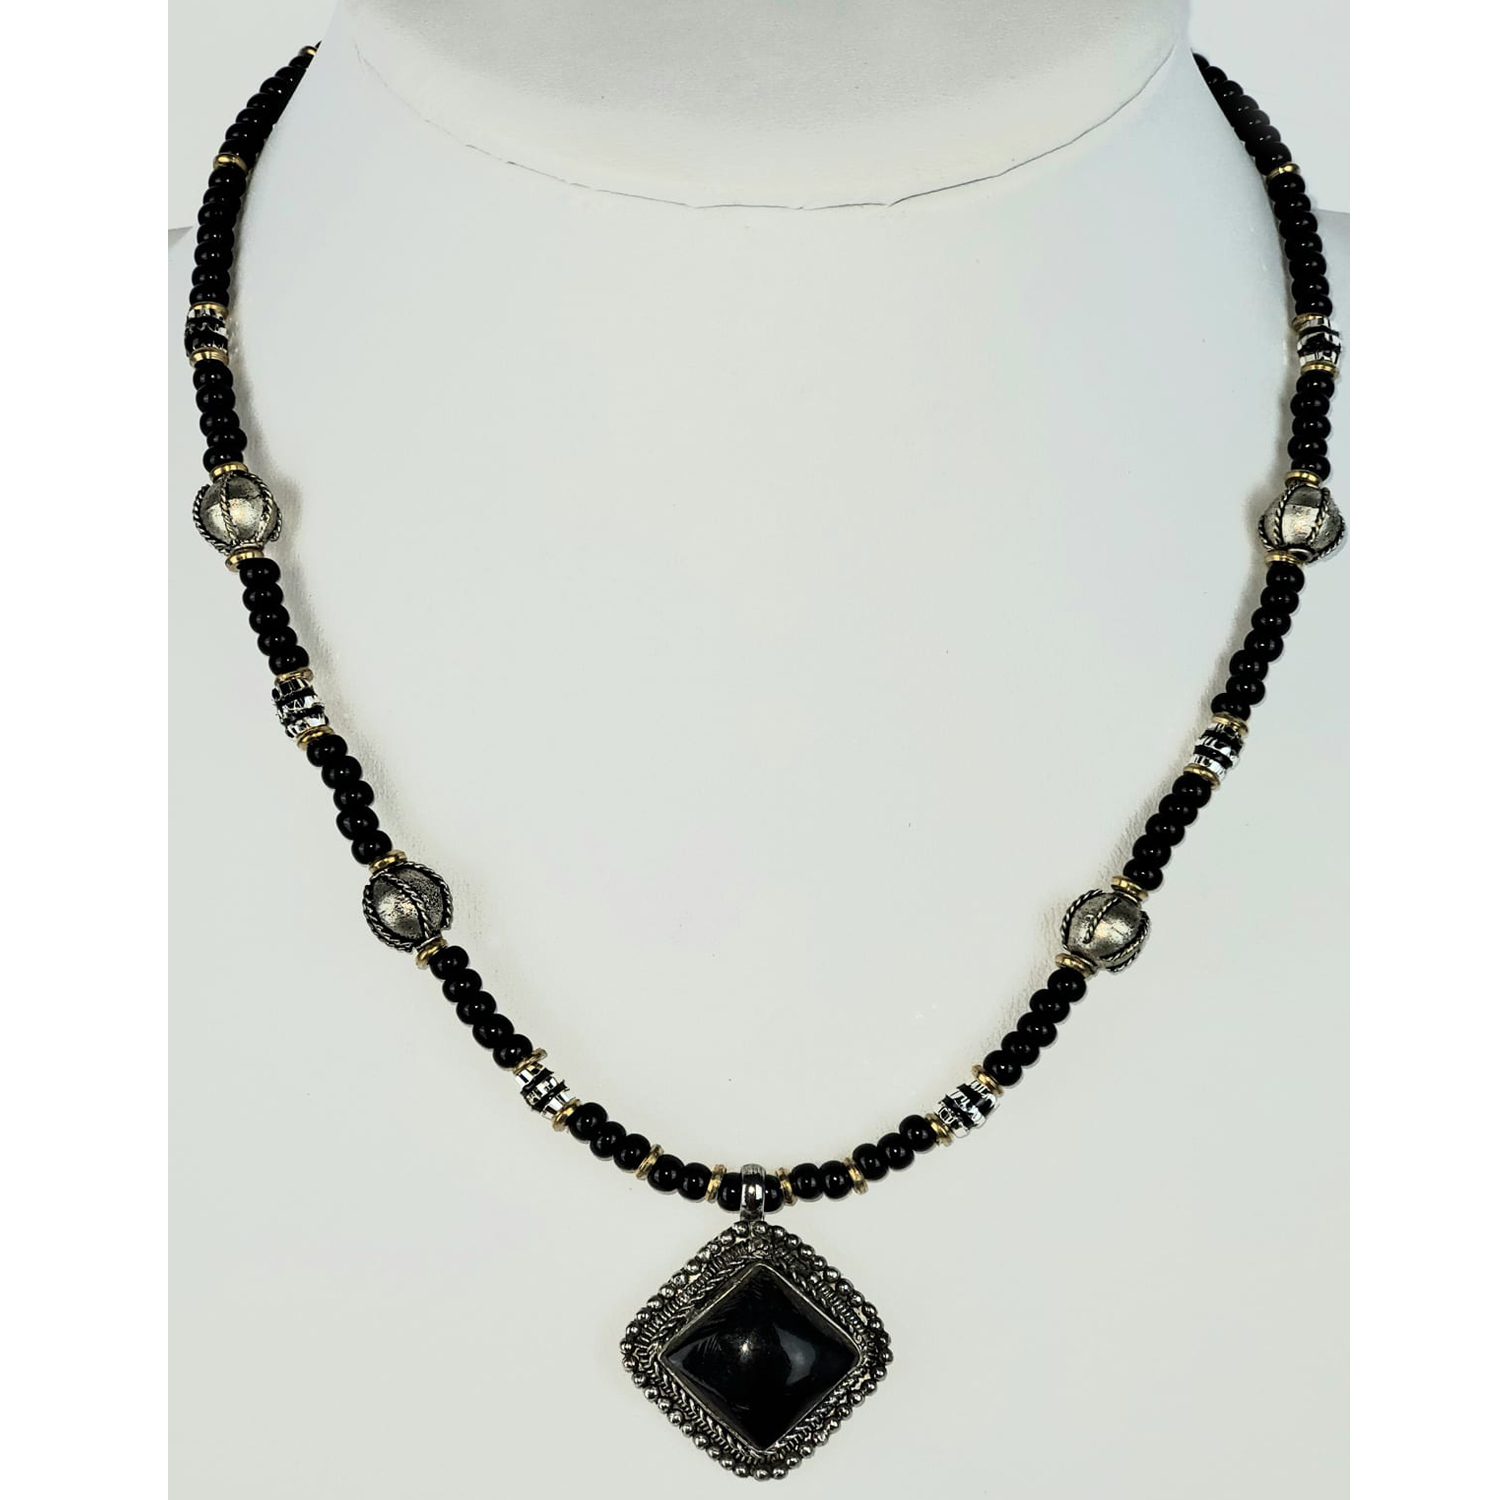 Western Style Necklace Black